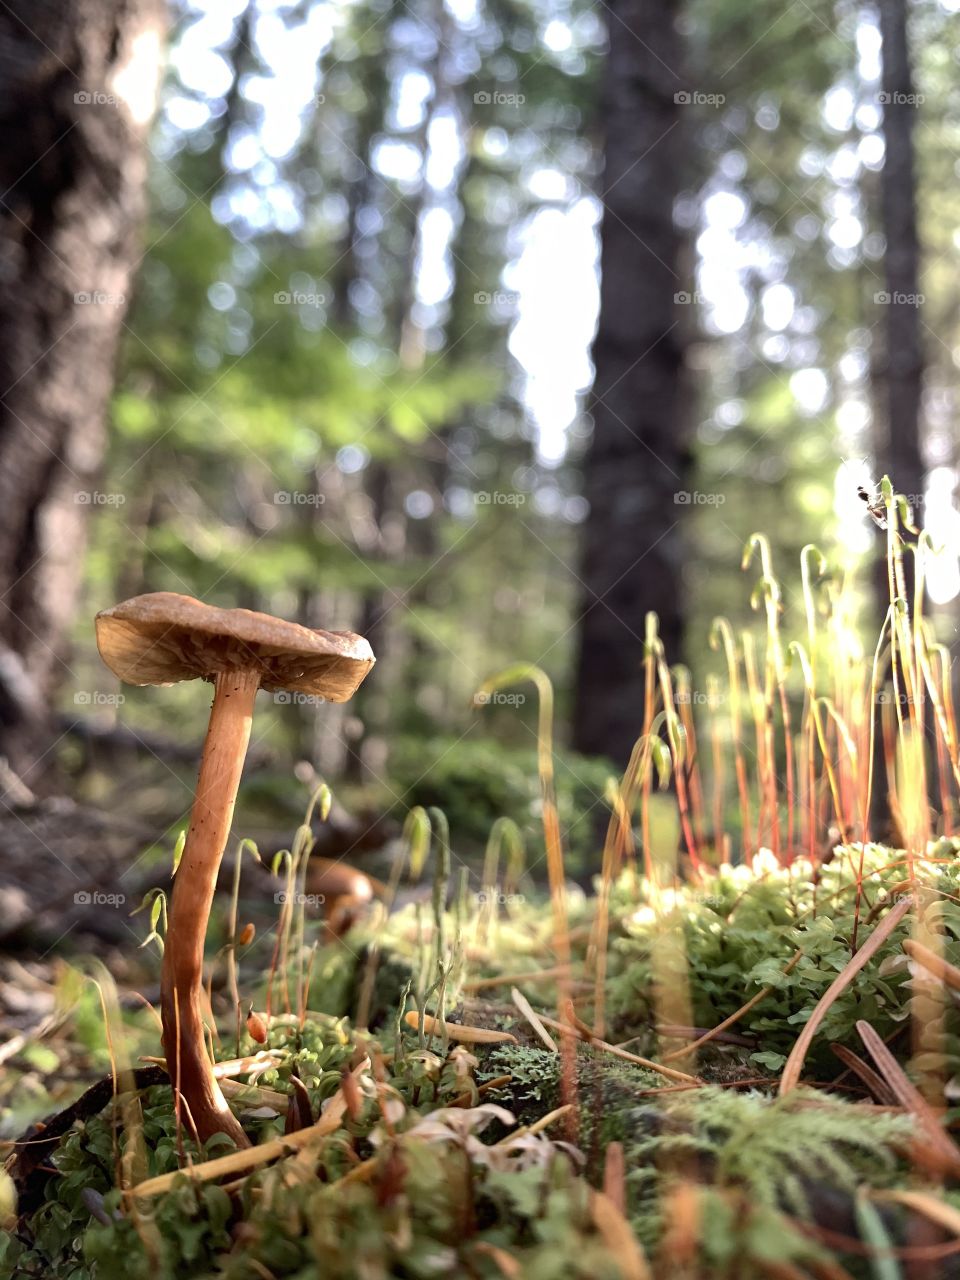 Mushroom & moss forest